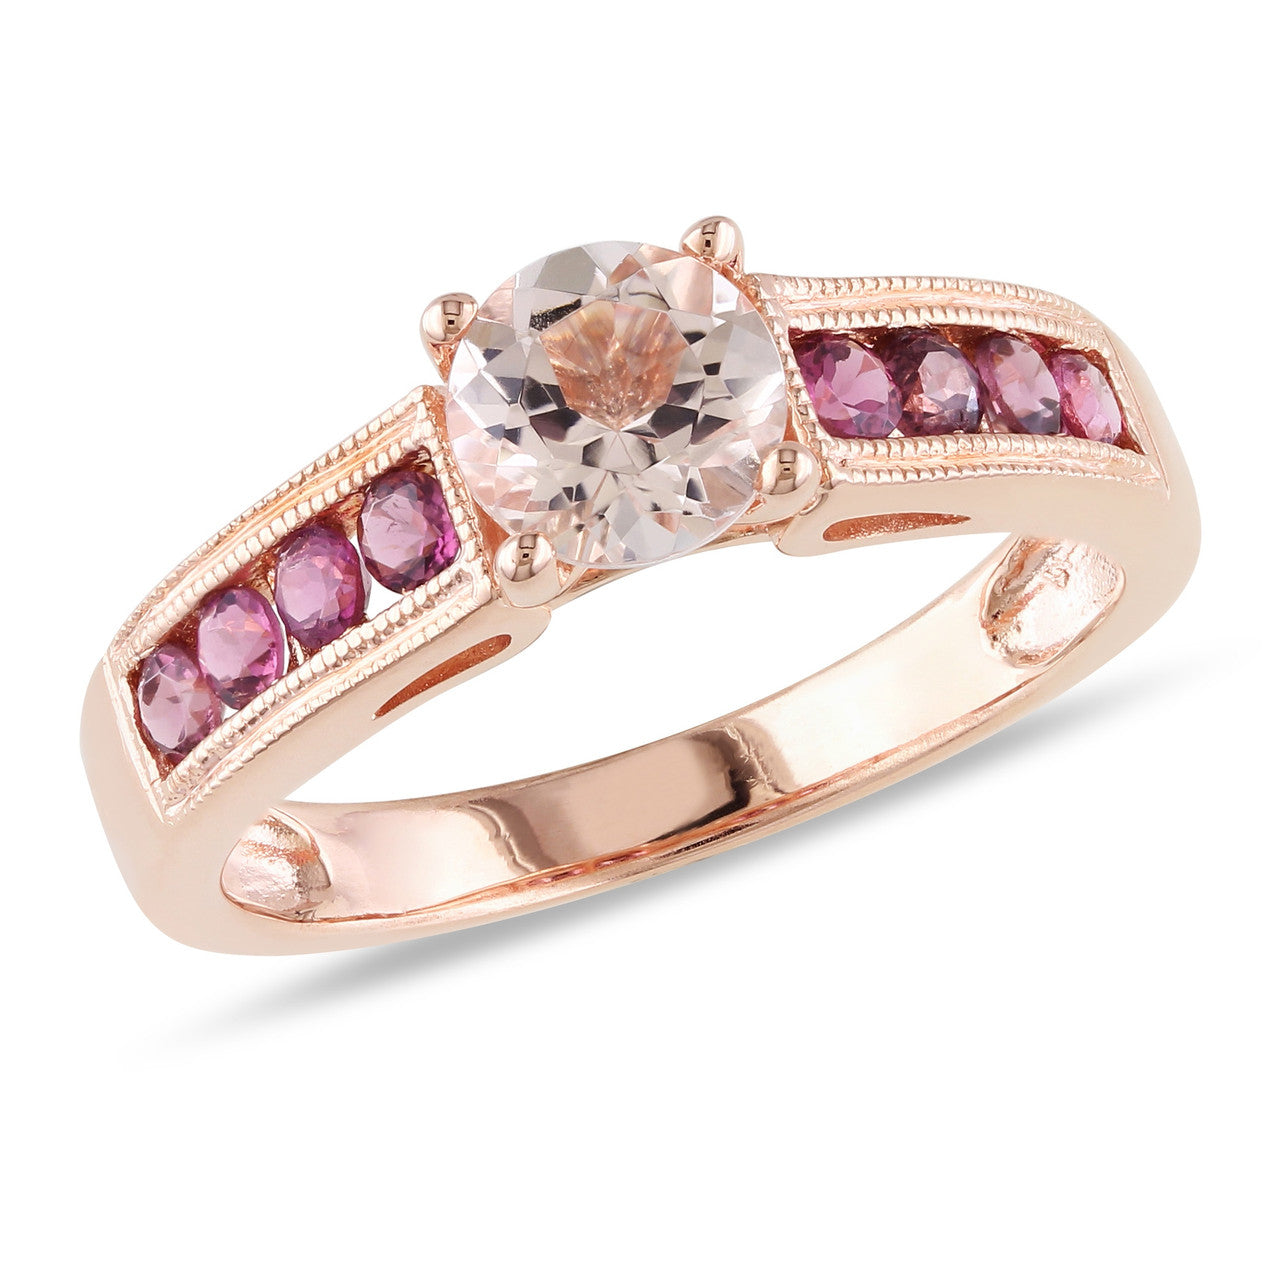 Ice Jewellery 1 1/6 CT TGW Pink Tourmaline Morganite Fashion Ring Pink Silver Pink Plated - 7500050411 | Ice Jewellery Australia